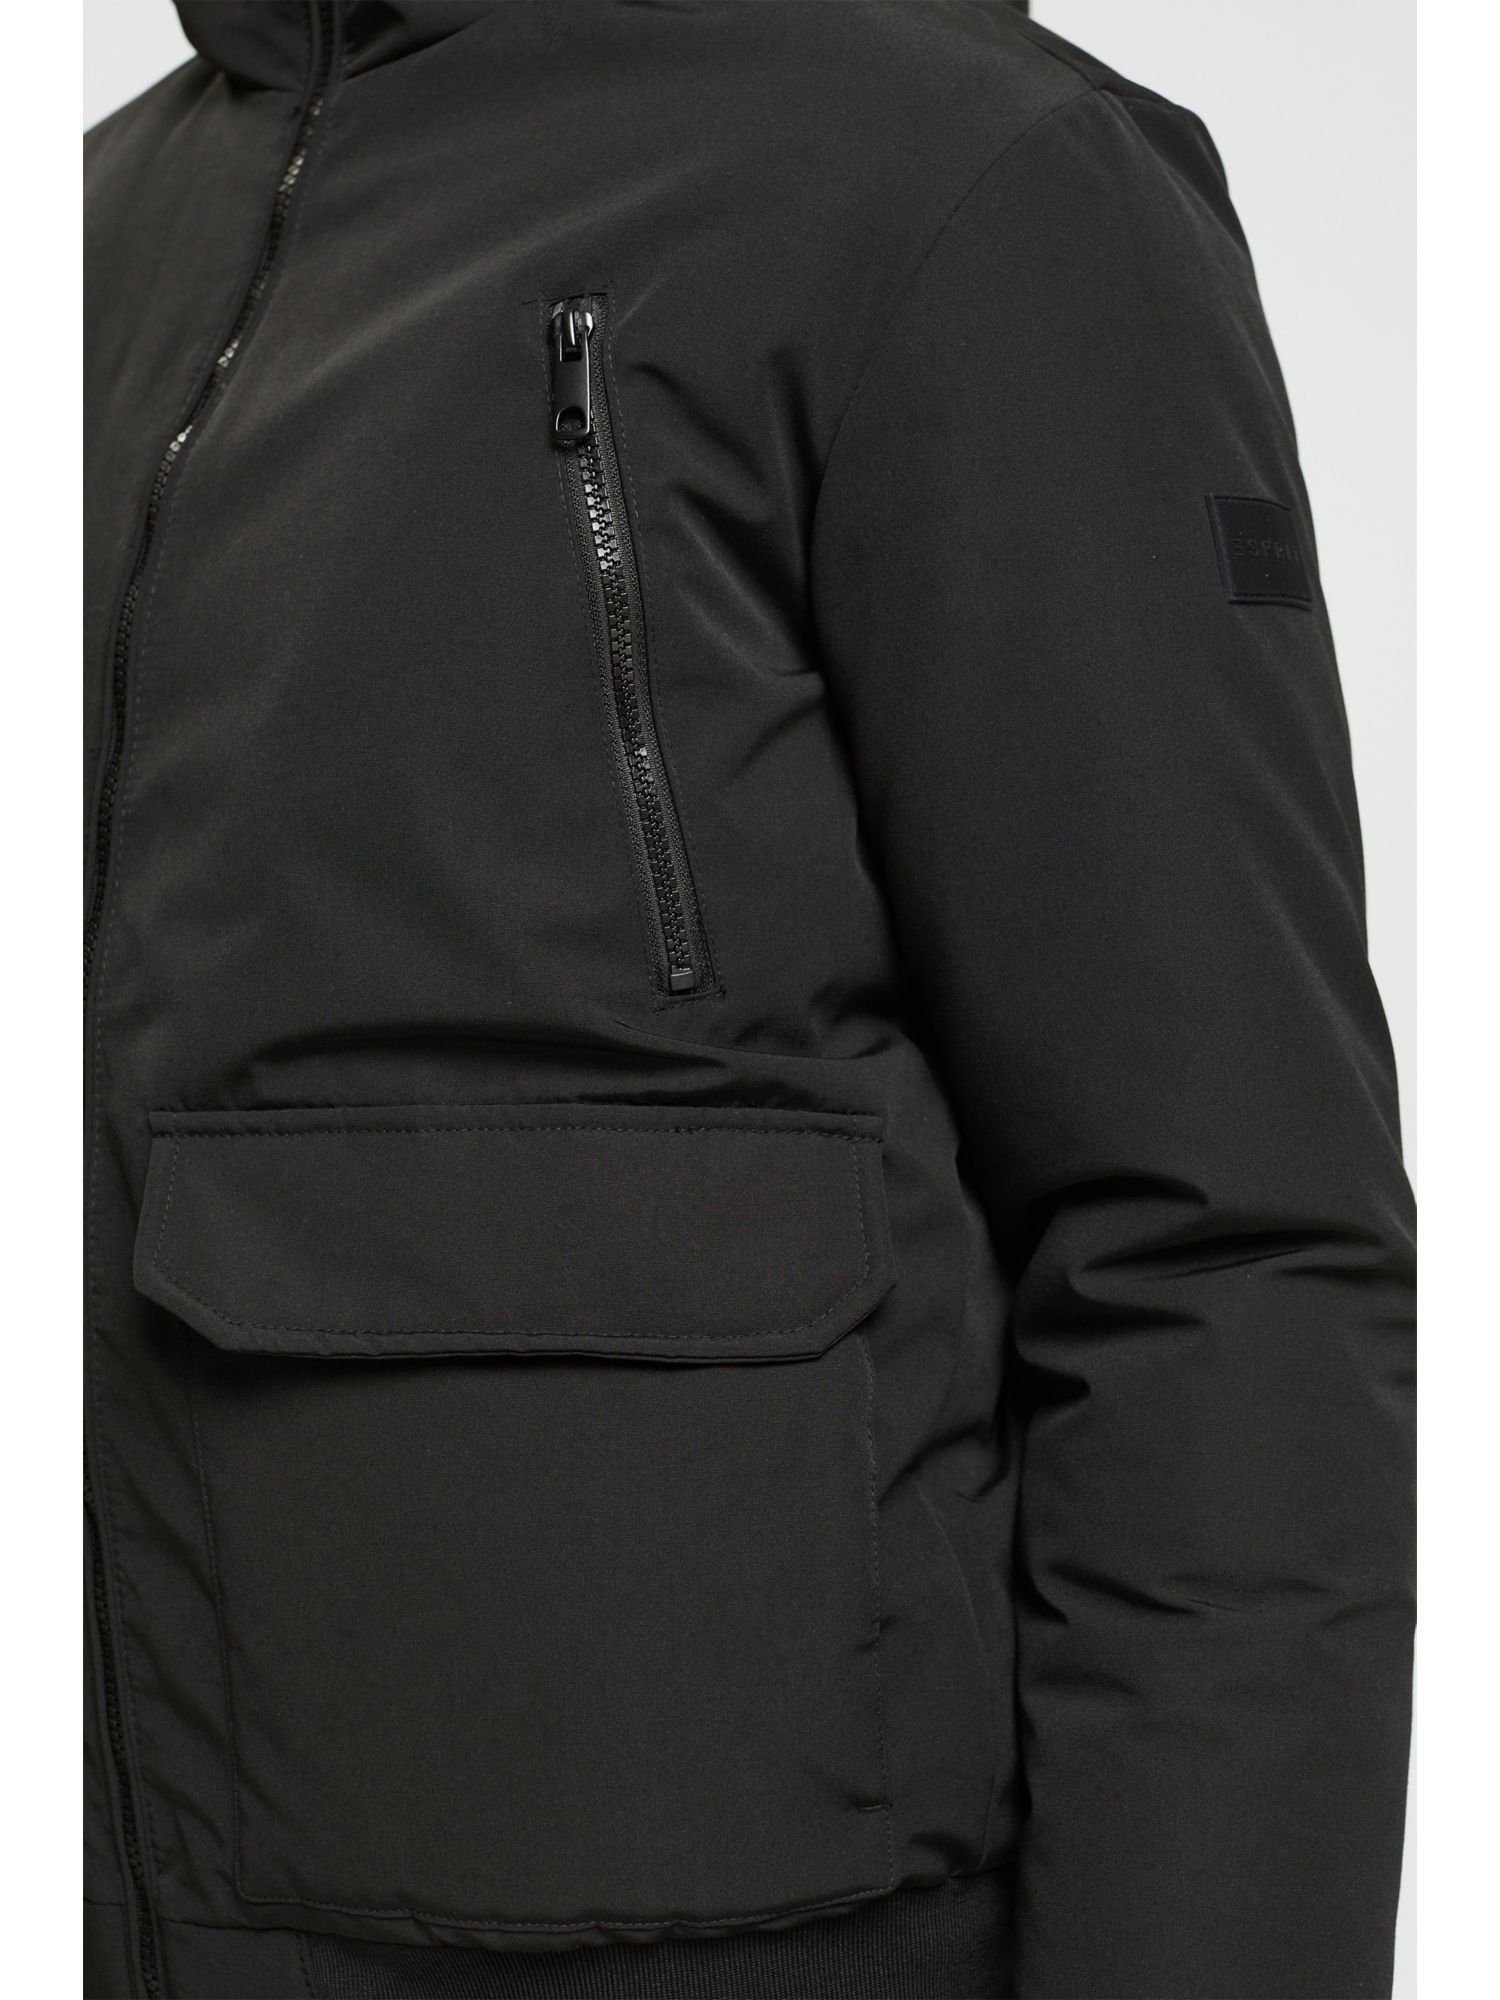 Esprit Winterjacke Jacke mit Kapuze BLACK